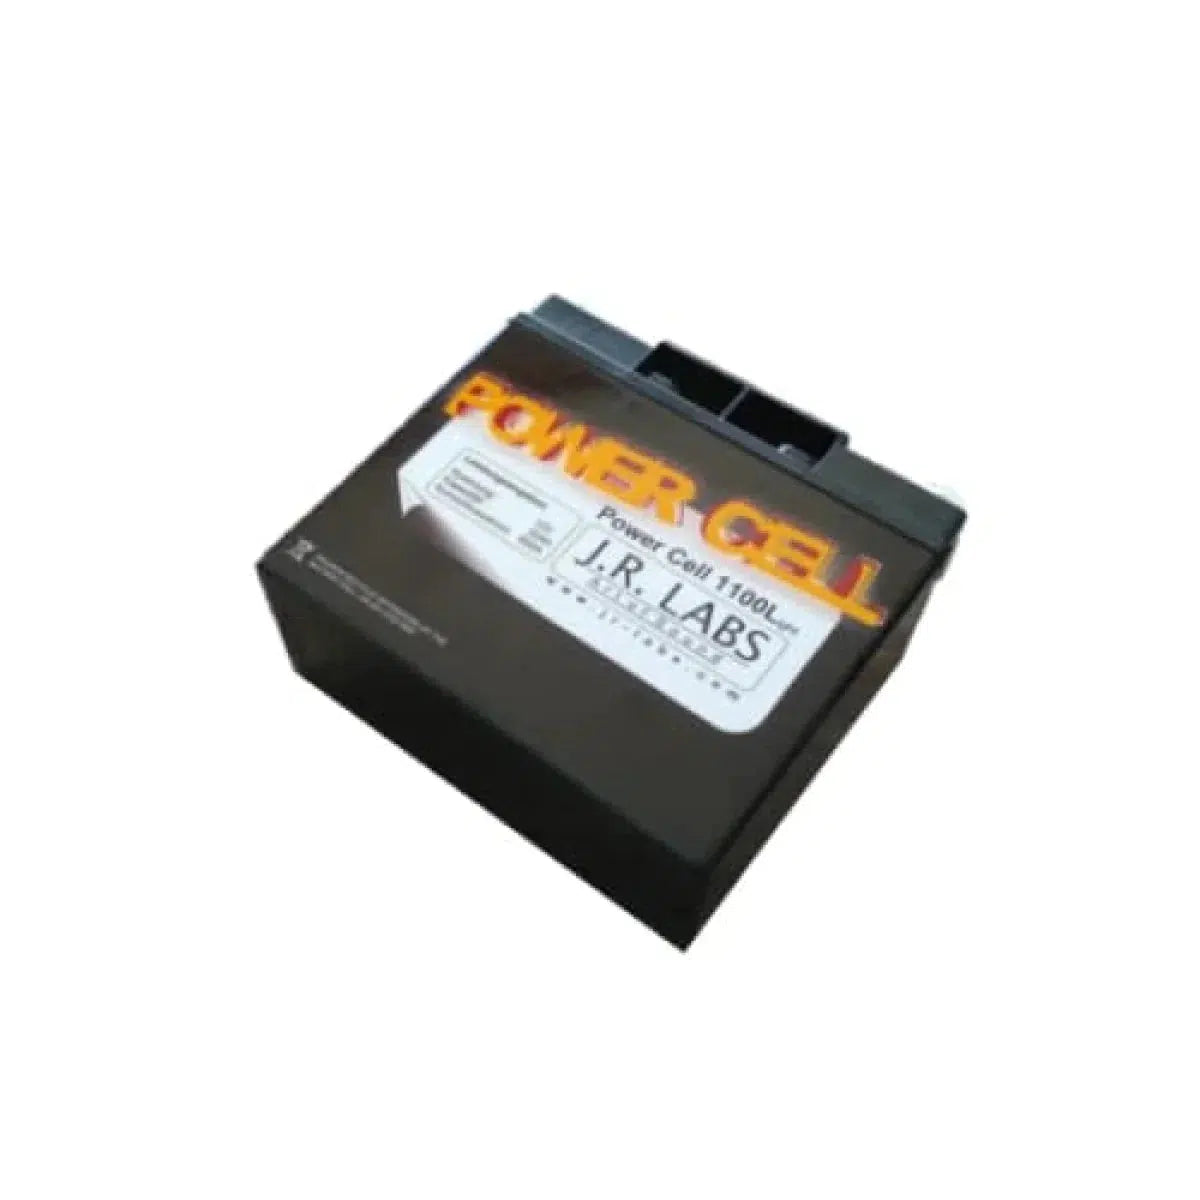 Power Cell-1100 - 24Ah AGM-AGM Battery-Masori.de